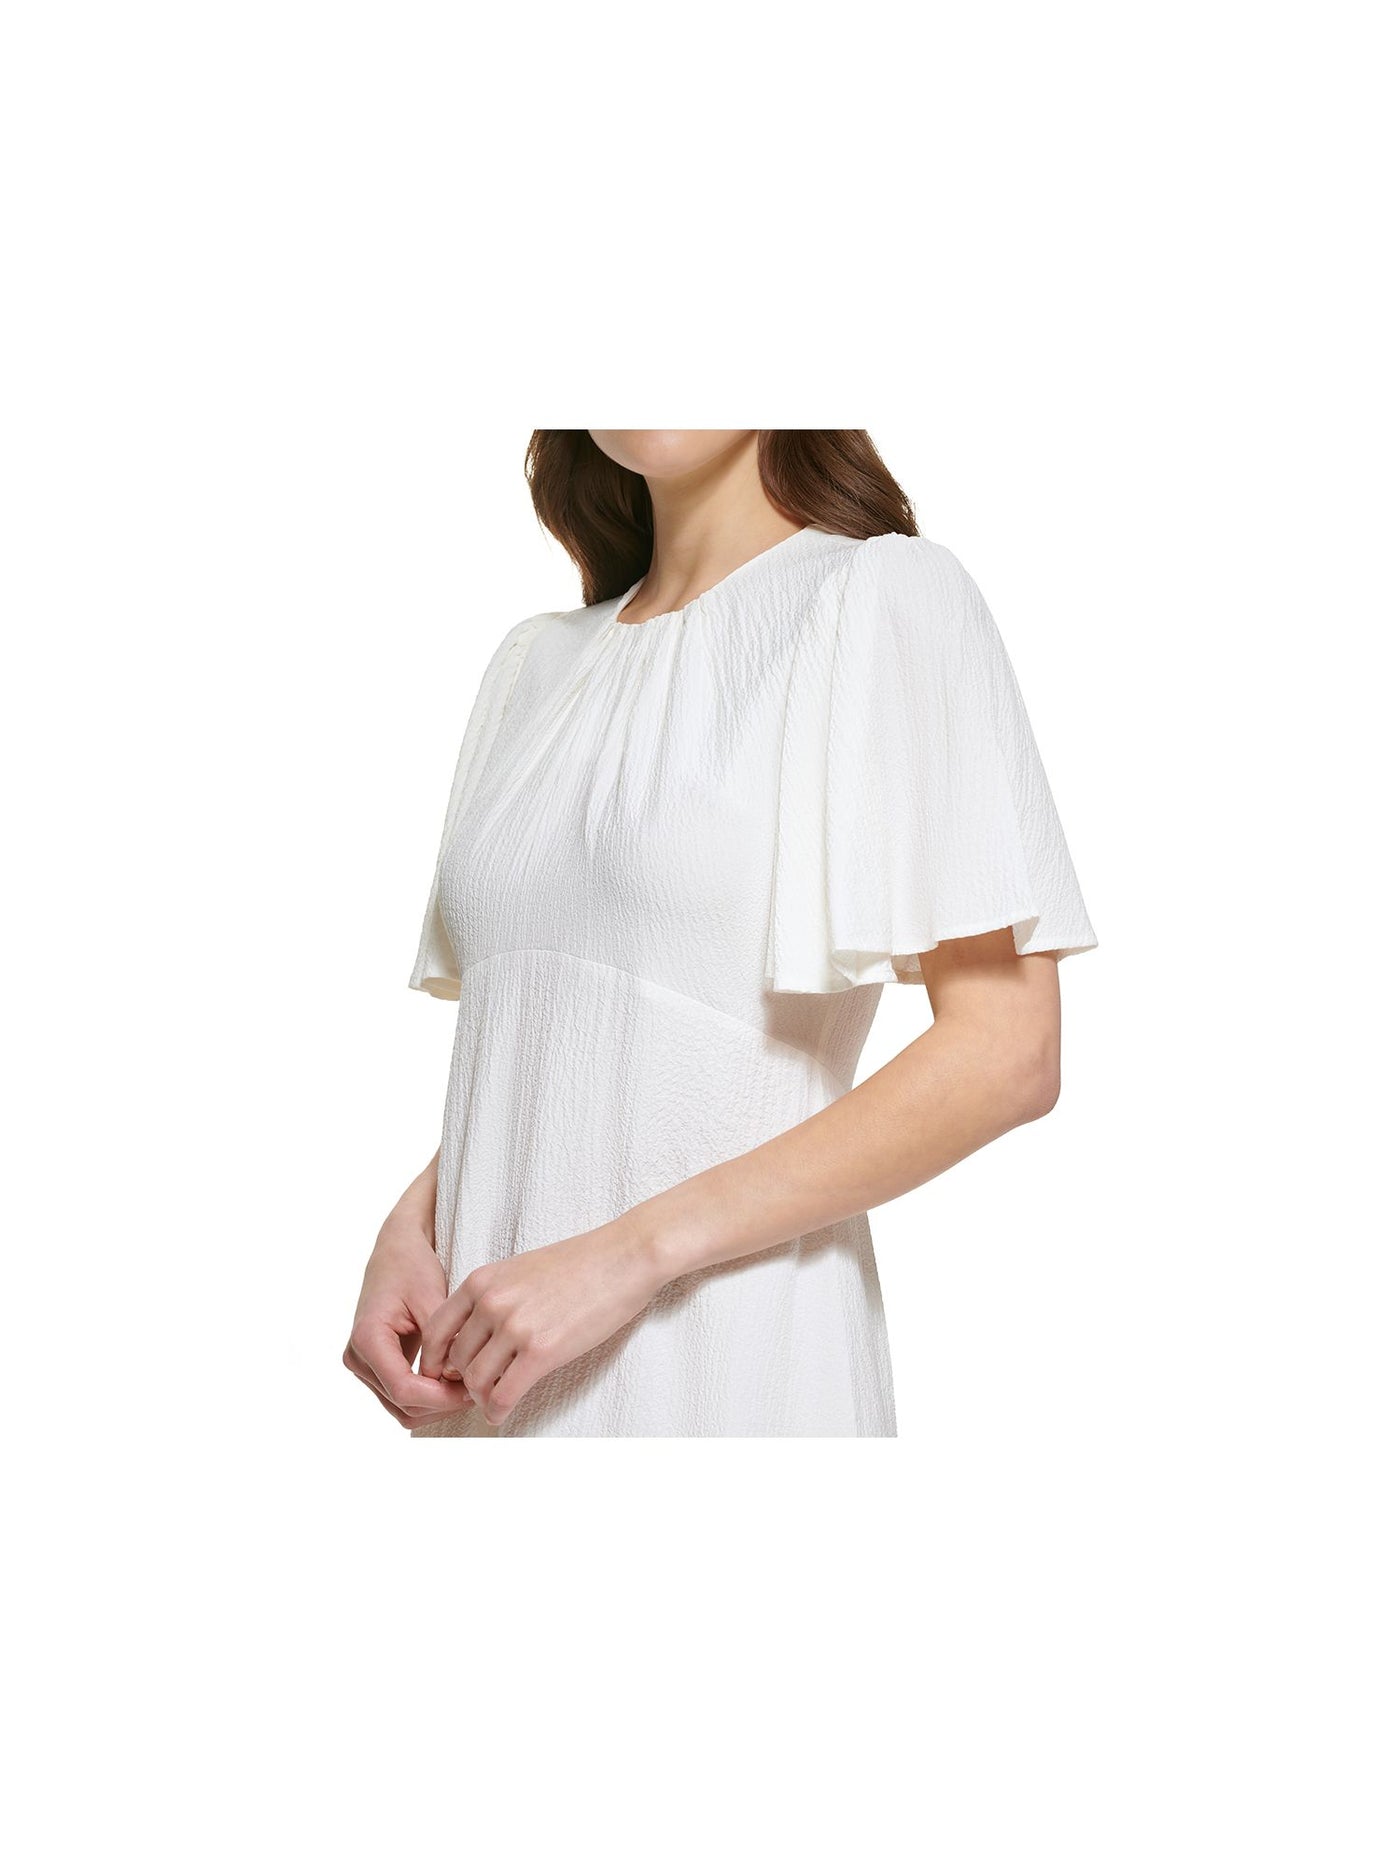 CALVIN KLEIN Womens White Textured Zippered Gathered Flutter Sleeve Round Neck Knee Length Party Sheath Dress 4